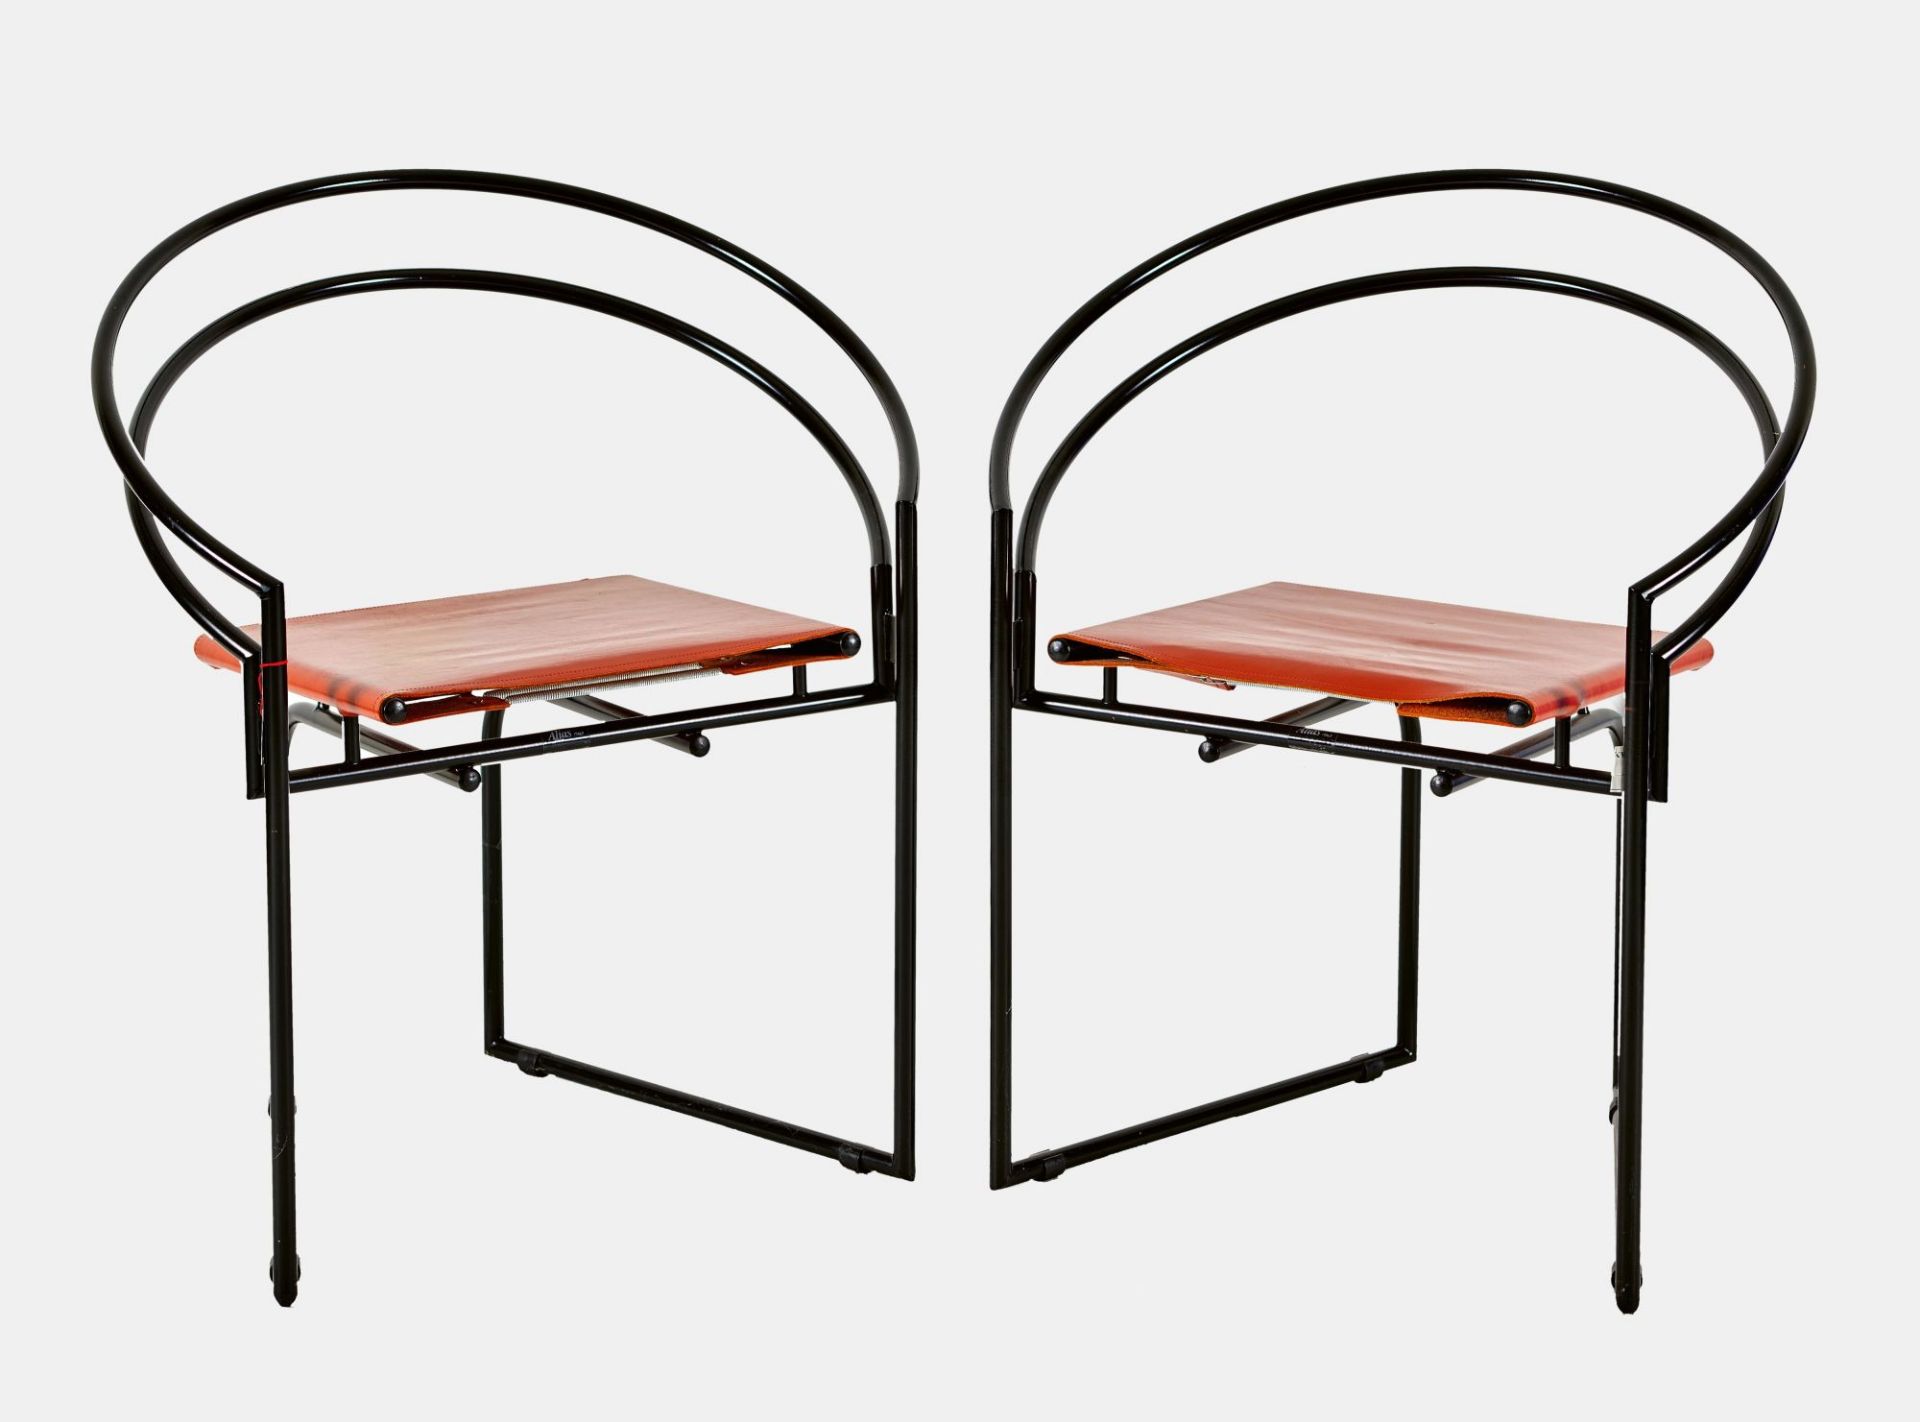 BOTTA, MARIO: Paar Stühle "Latonda", Entwurf 1986 (Ausführung Alias).